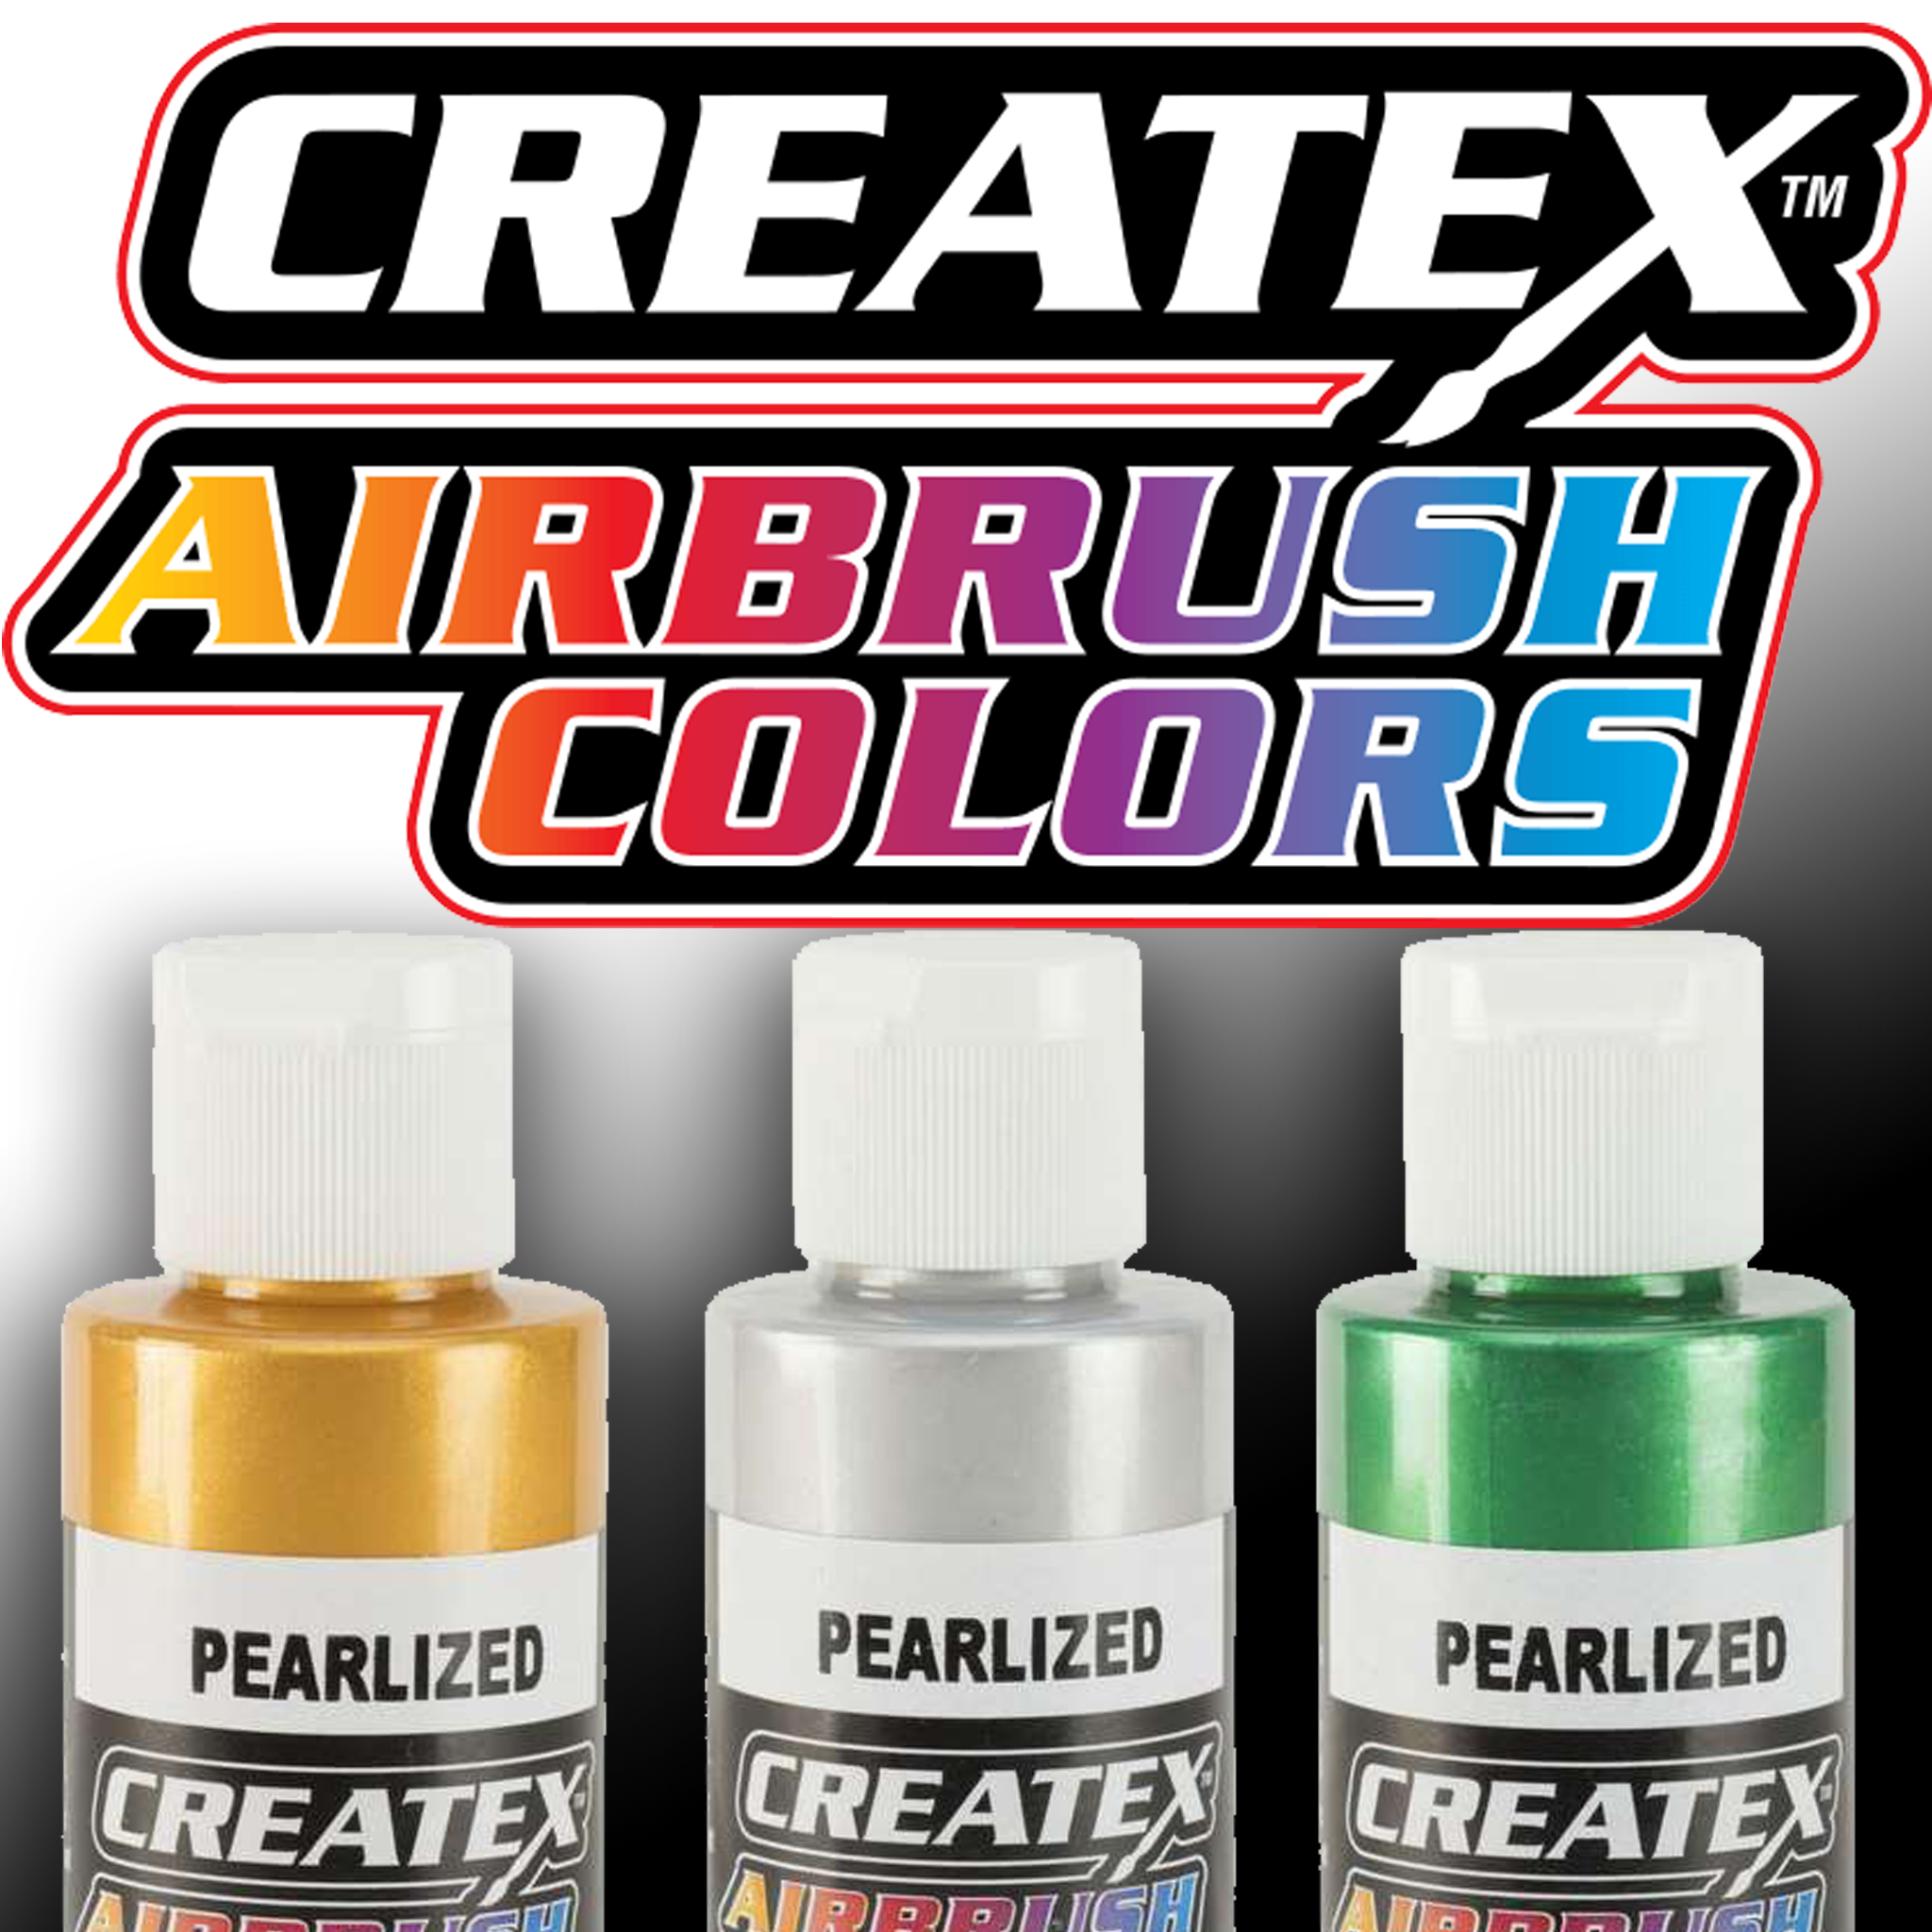 Createx Colors Illustration Opaque Set, 2 oz.: Anest Iwata-Medea, Inc.